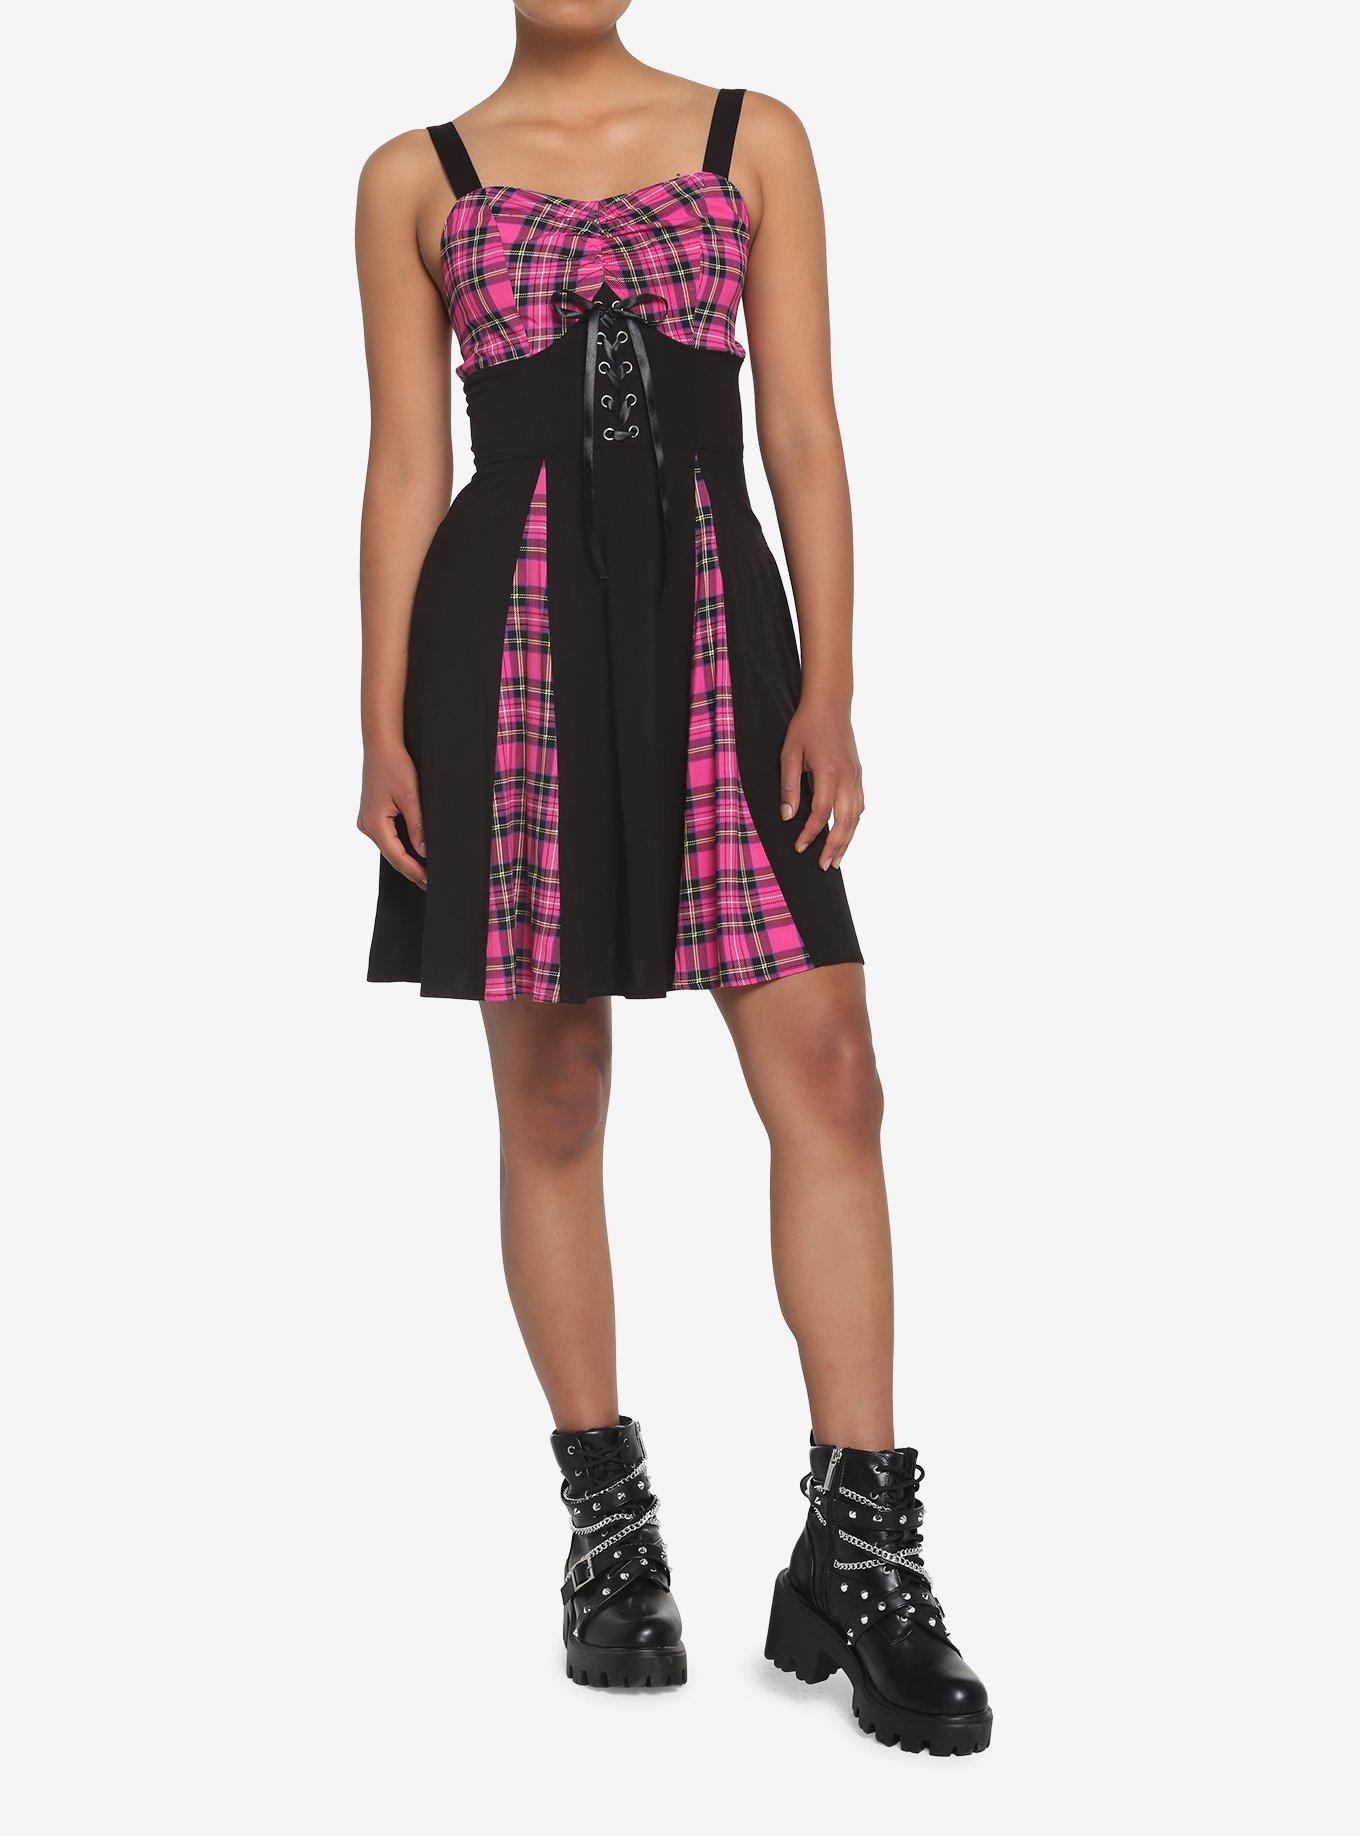 Pink Plaid & Black Lace-Up Dress, PLAID - PINK, alternate